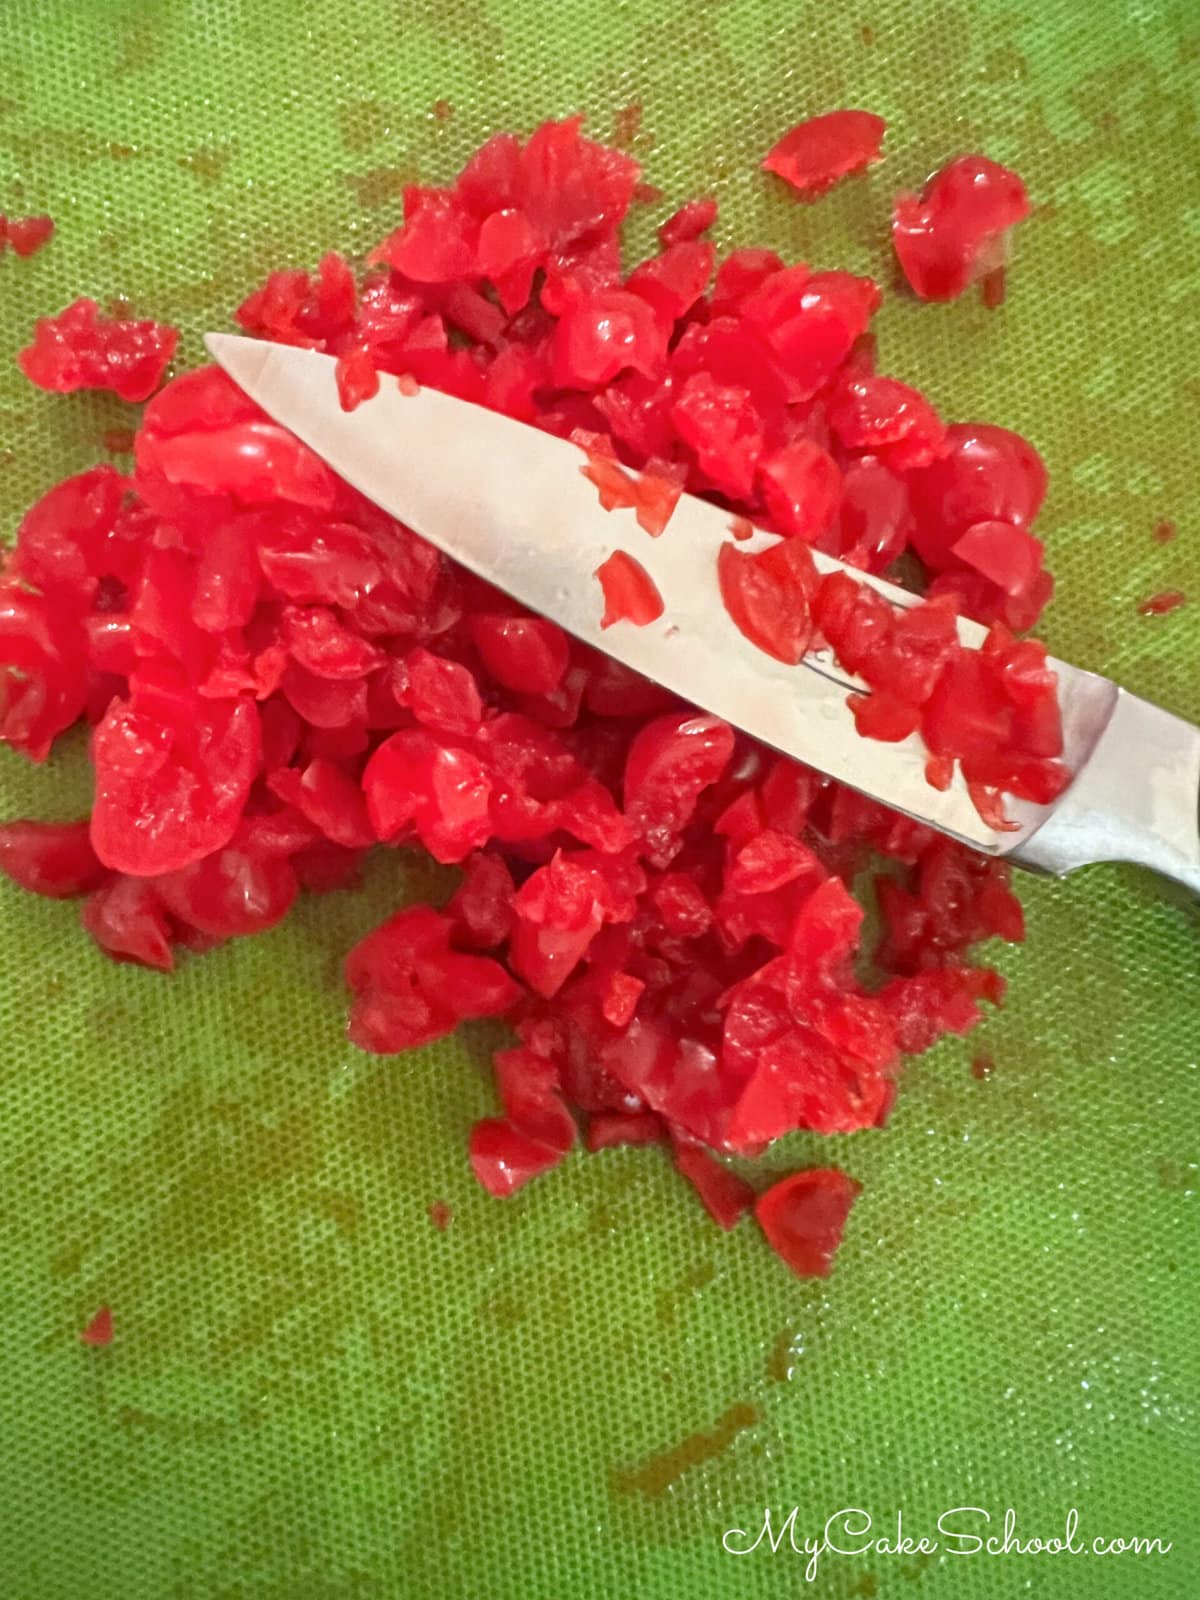 Chopped cherries on cutting board.